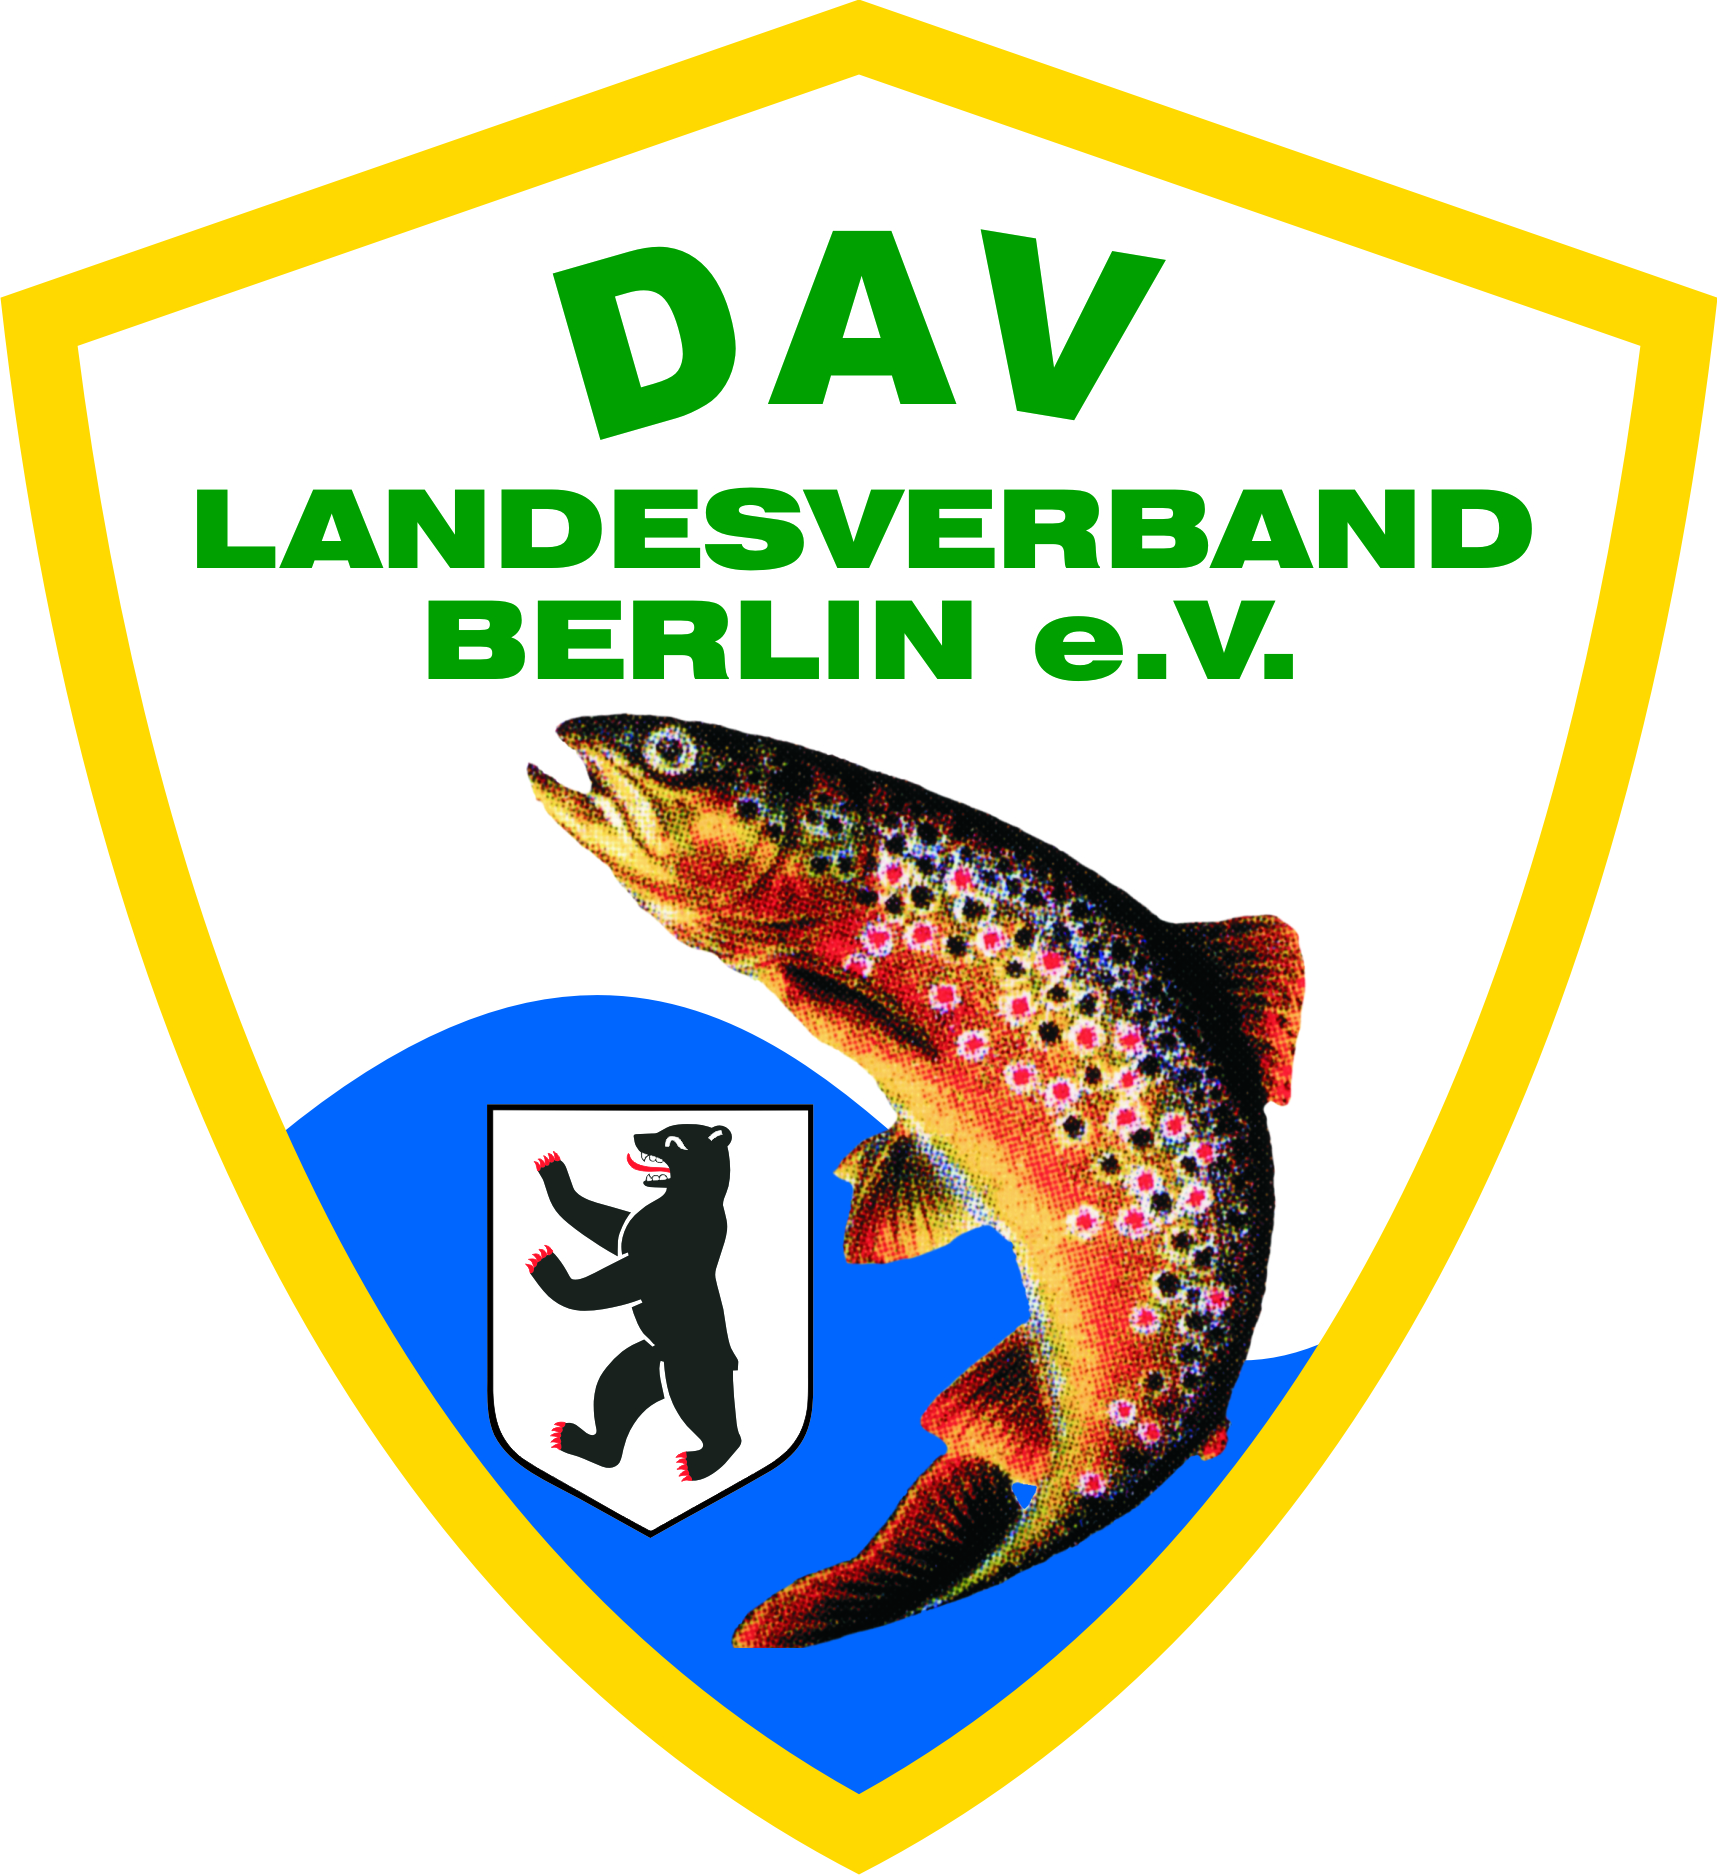 DAV Landesverband Berlin e.V.